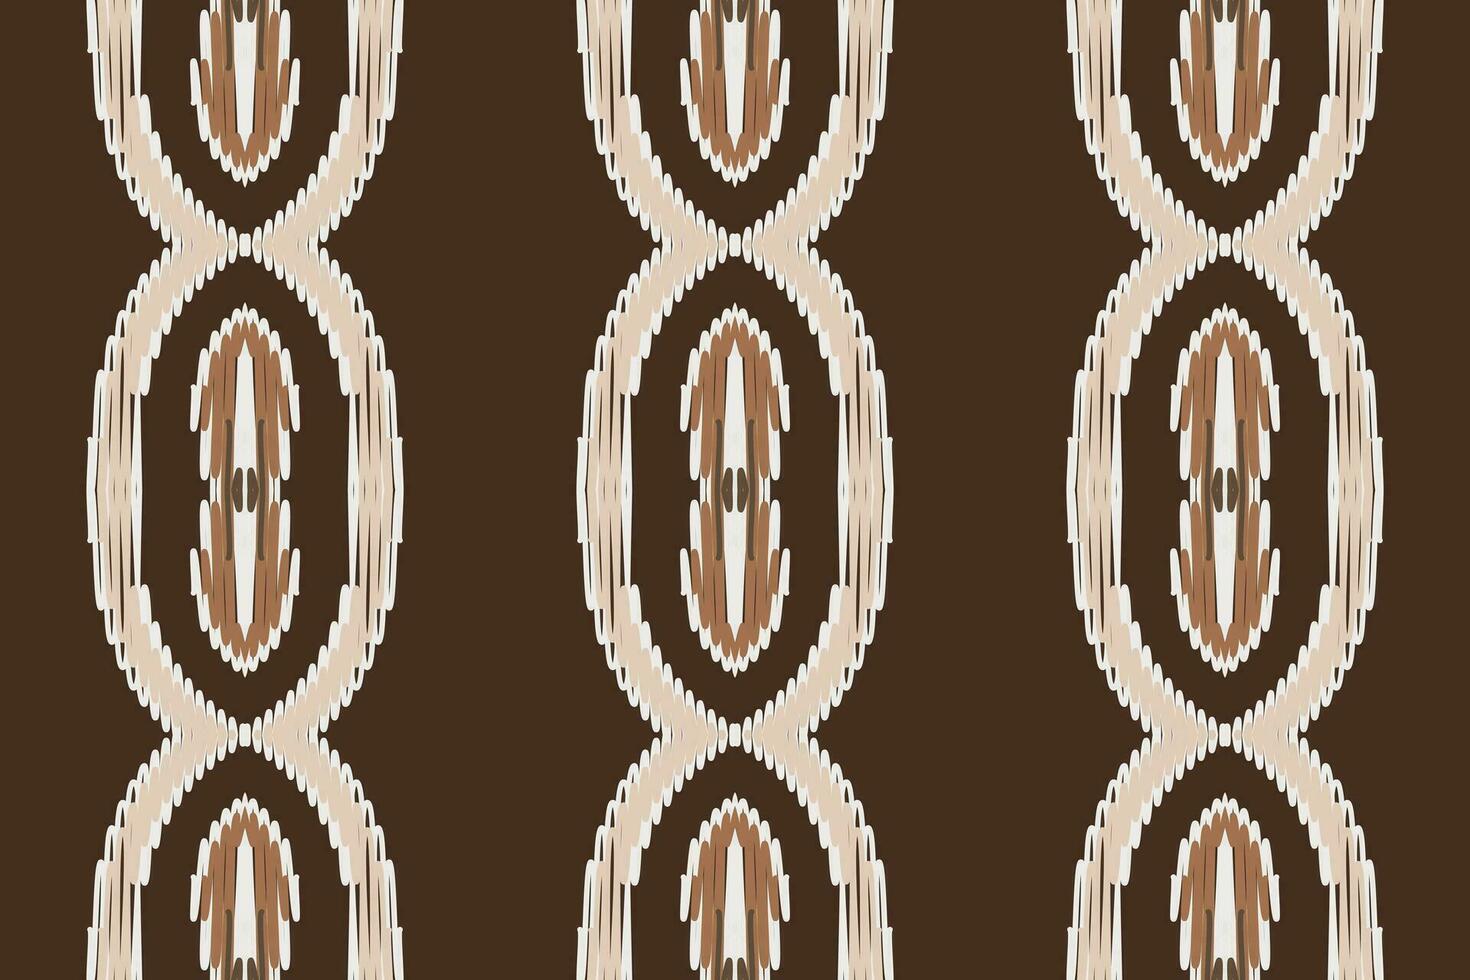 navajo modelo sin costura pañuelo impresión seda motivo bordado, ikat bordado vector diseño para impresión 60s cachemir Corbata colorante Damasco ornamento alfombras hipster kurta pijama